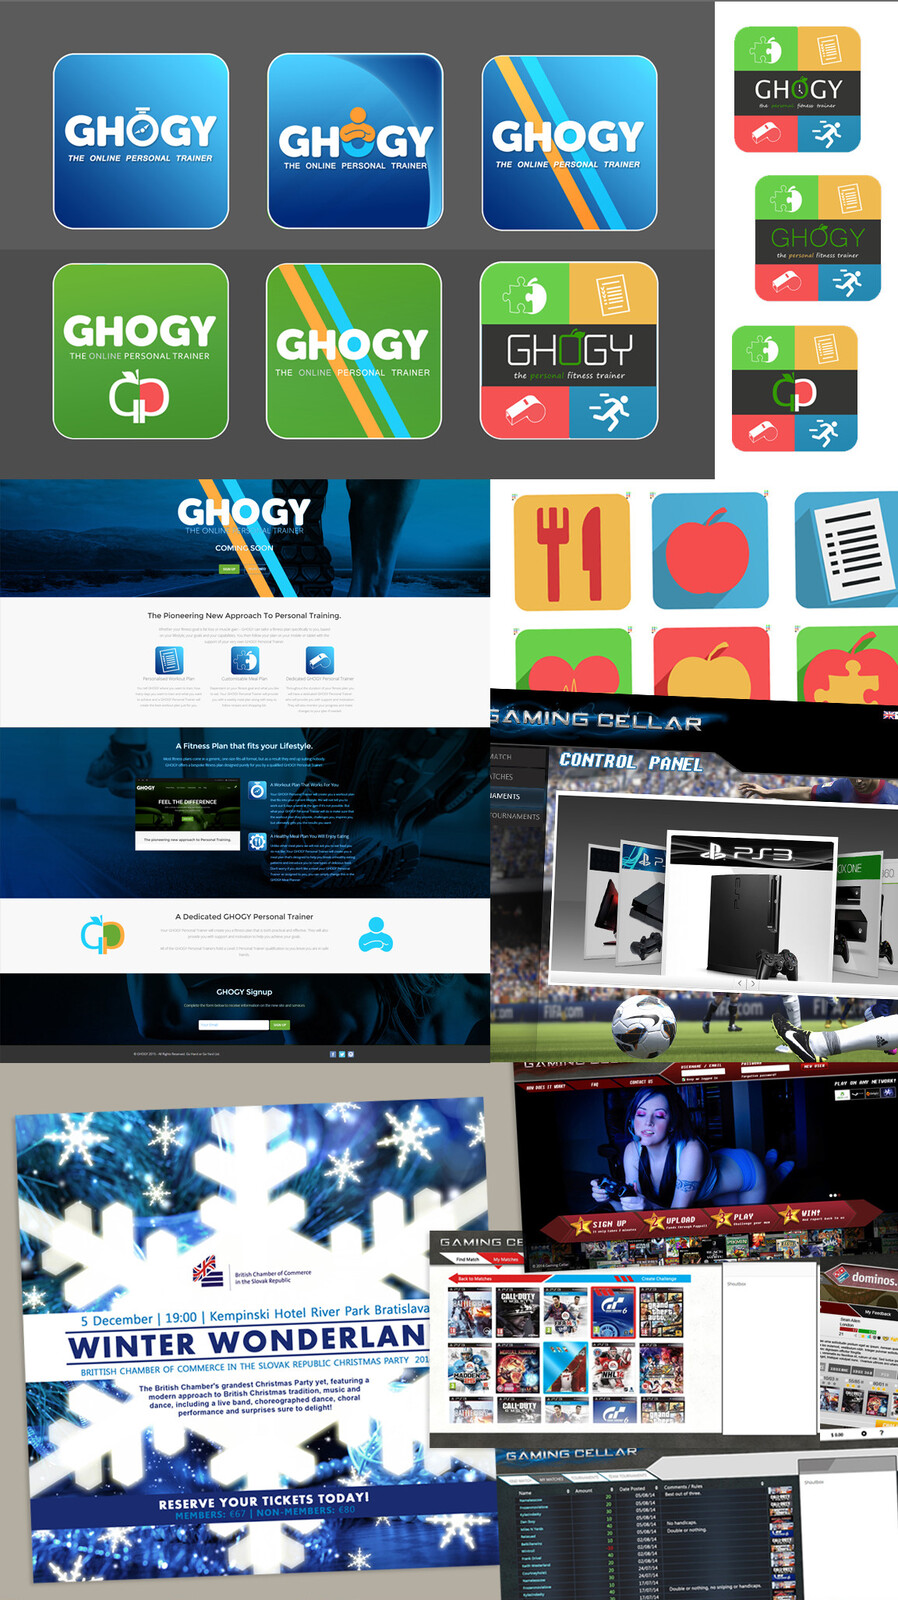 App logo, Websites and Graphic Design/Print.